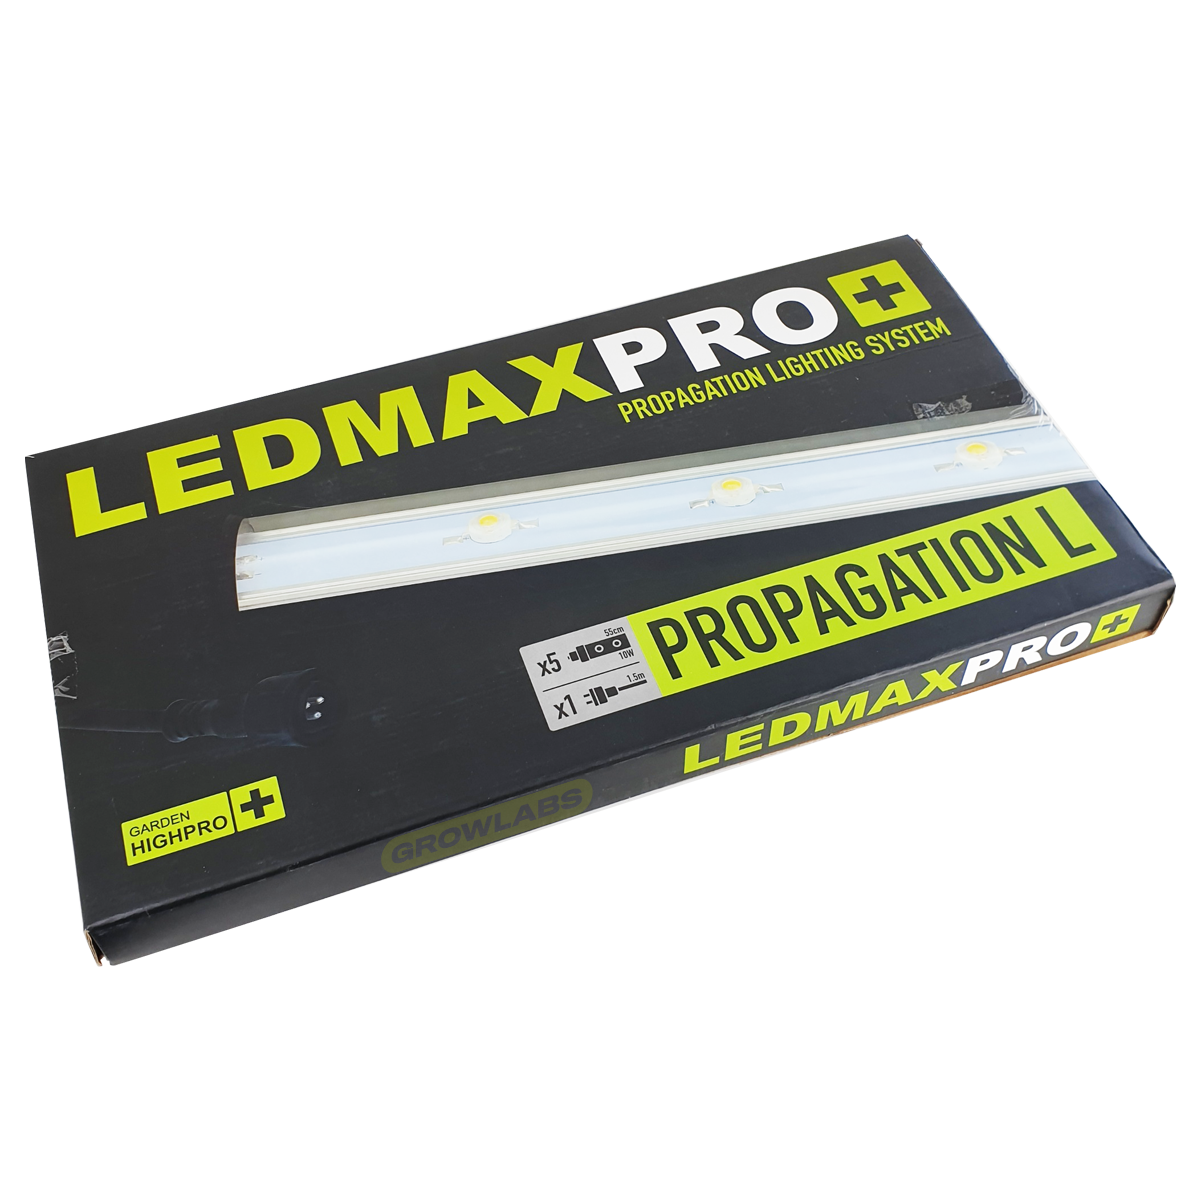 Garden HighPro Led Max Pro, Propagations L, 5x 55cm – Growlabs